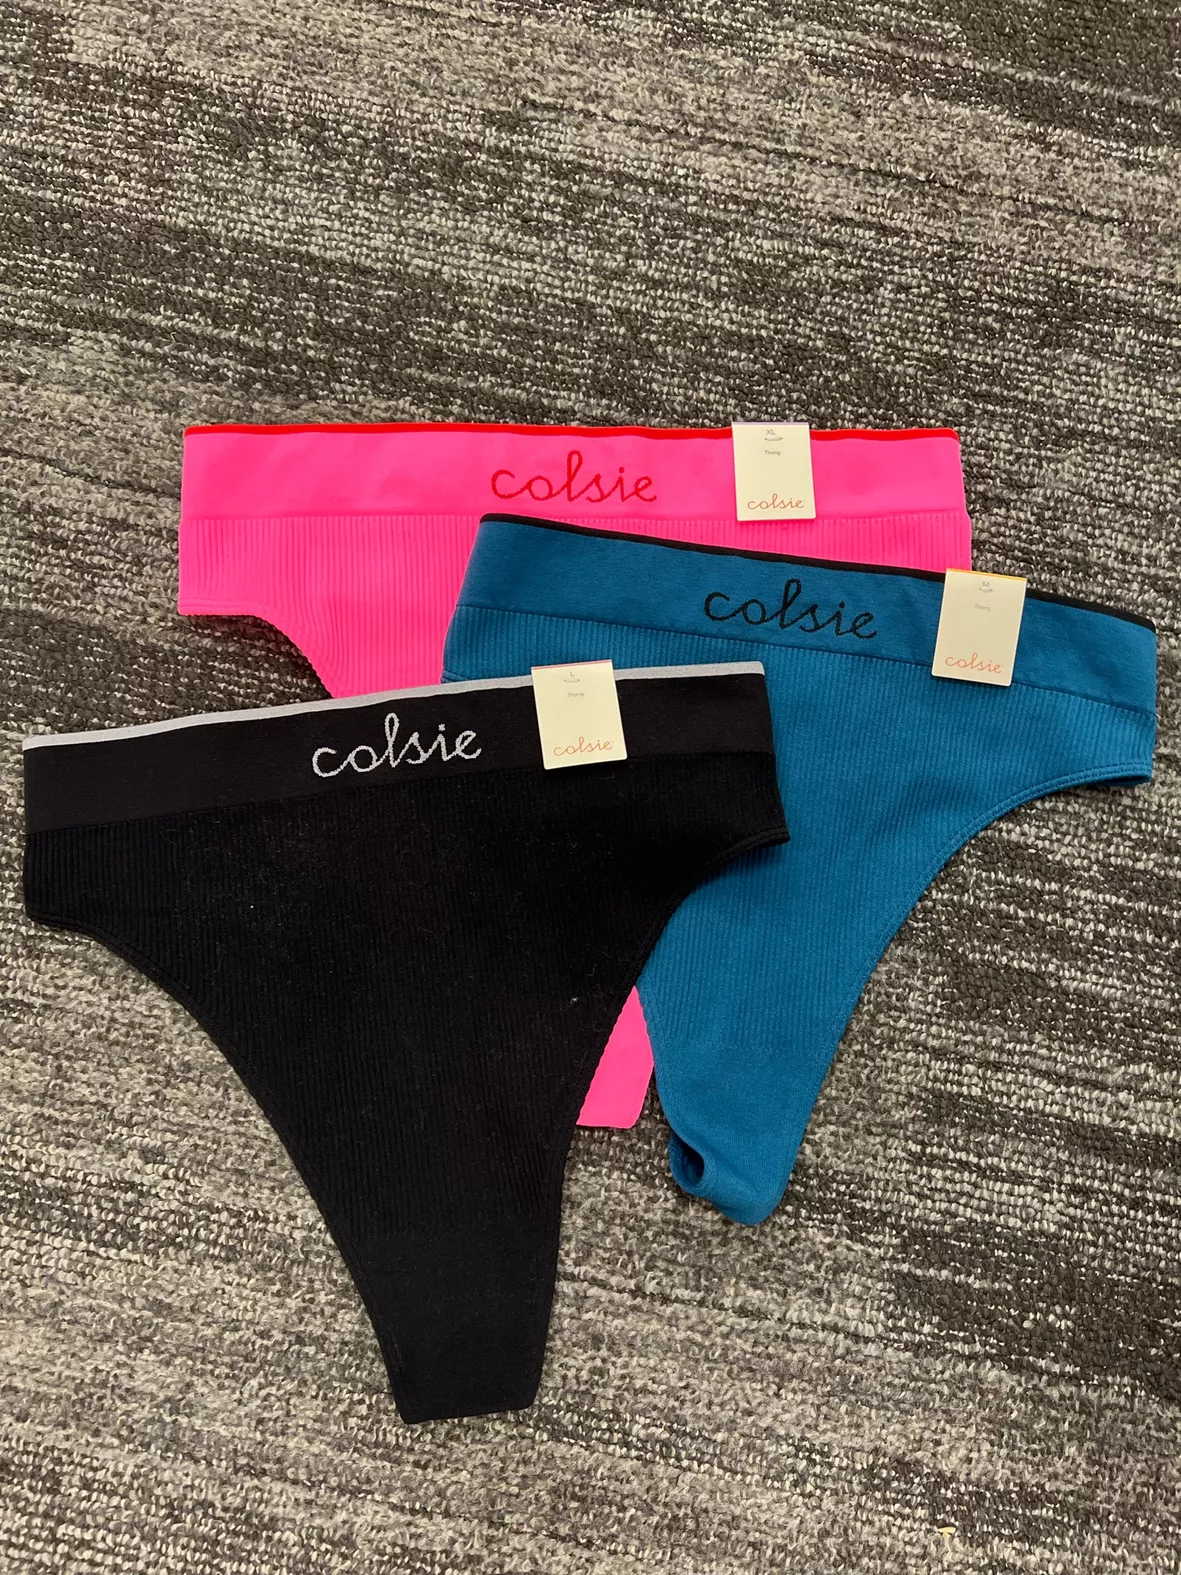 Sale Deals Women's Panties Boyshorts Seamless Underwear For Women